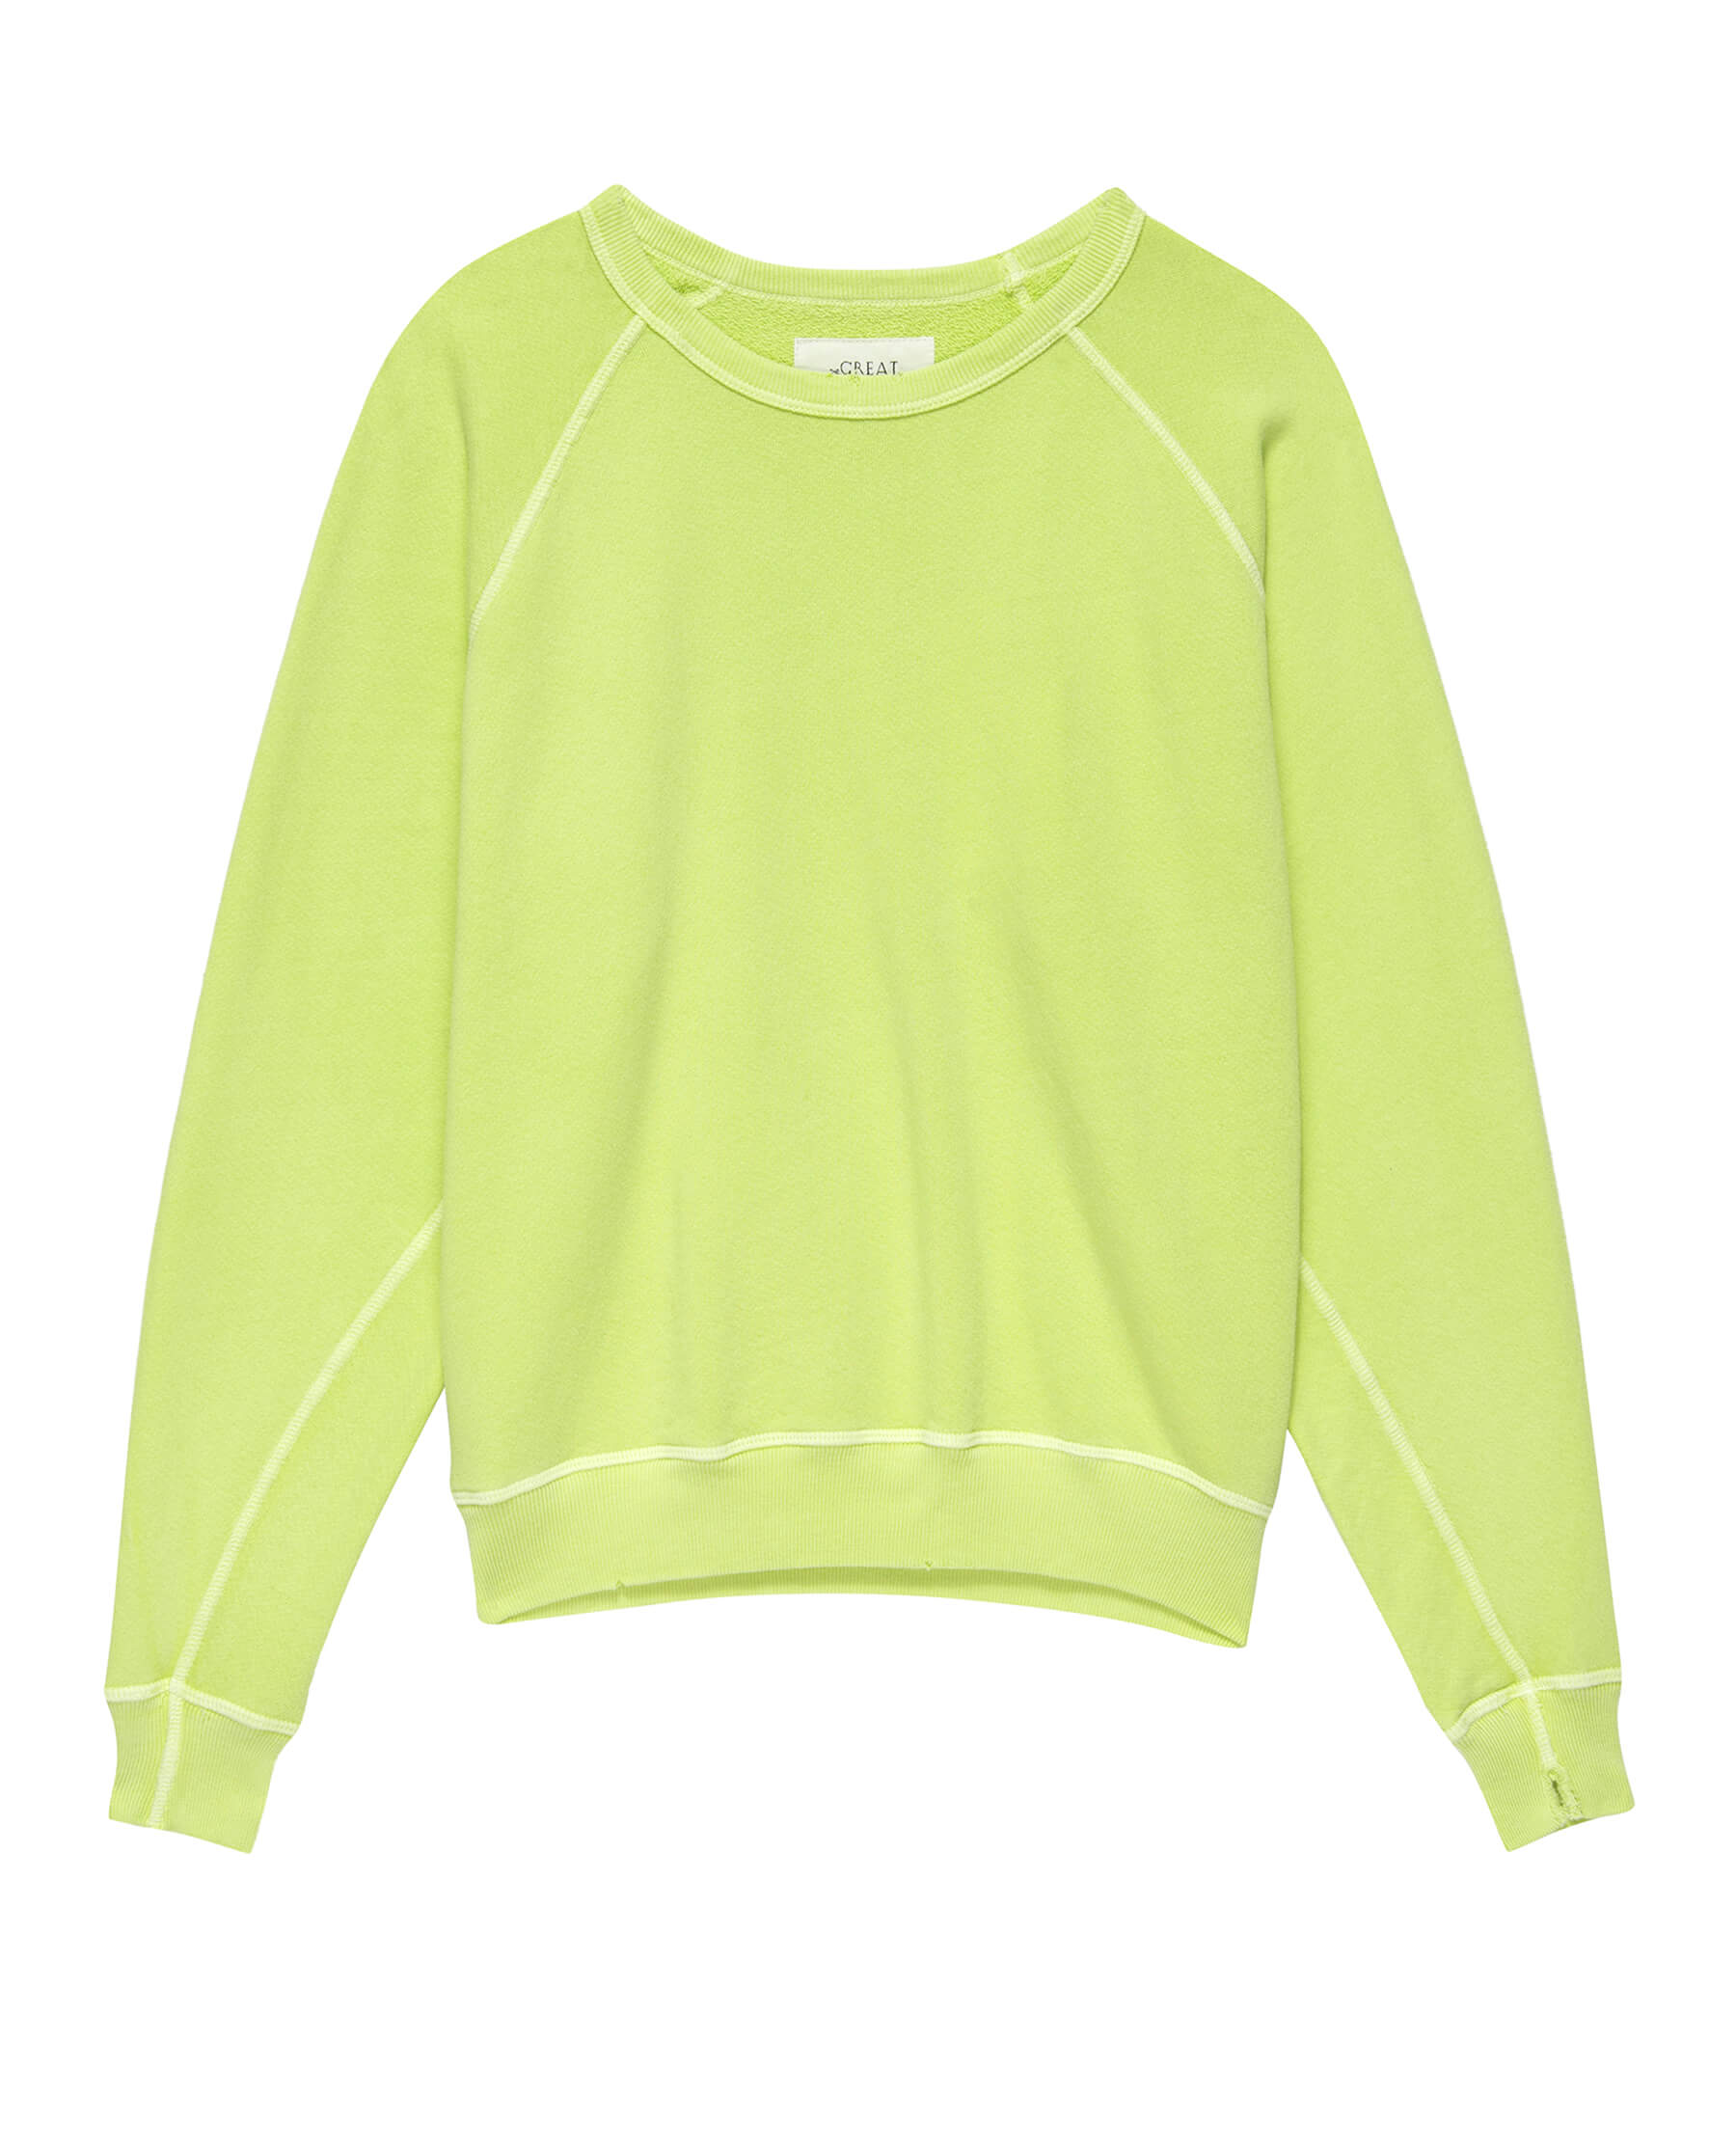 The College Sweatshirt. Solid -- Lime Zest